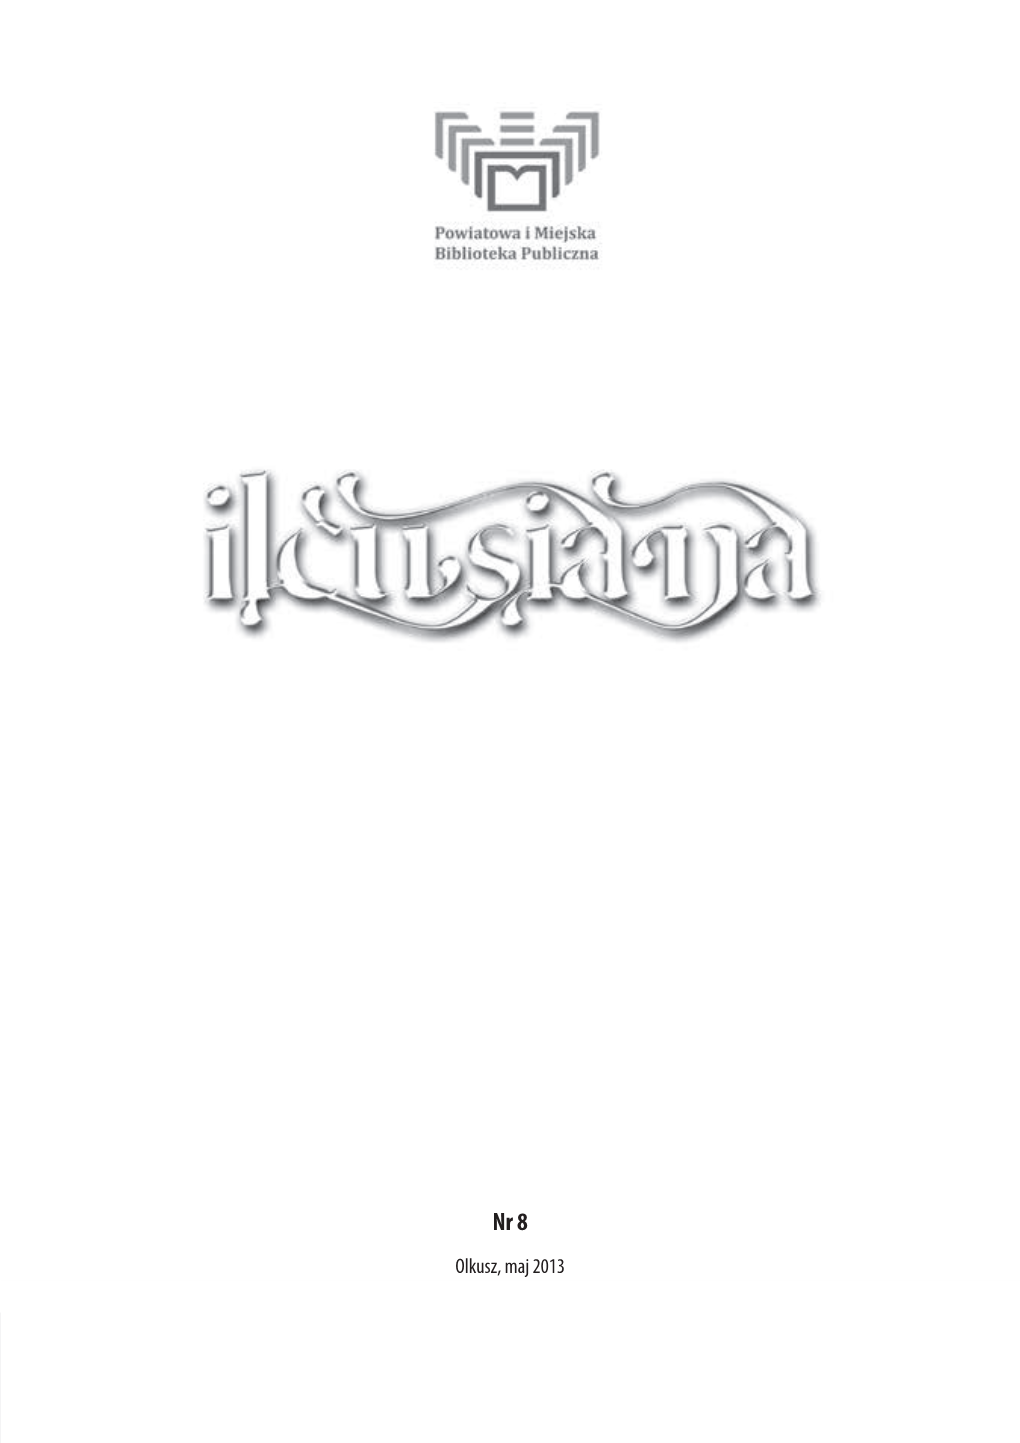 Lcusiana Nr 8